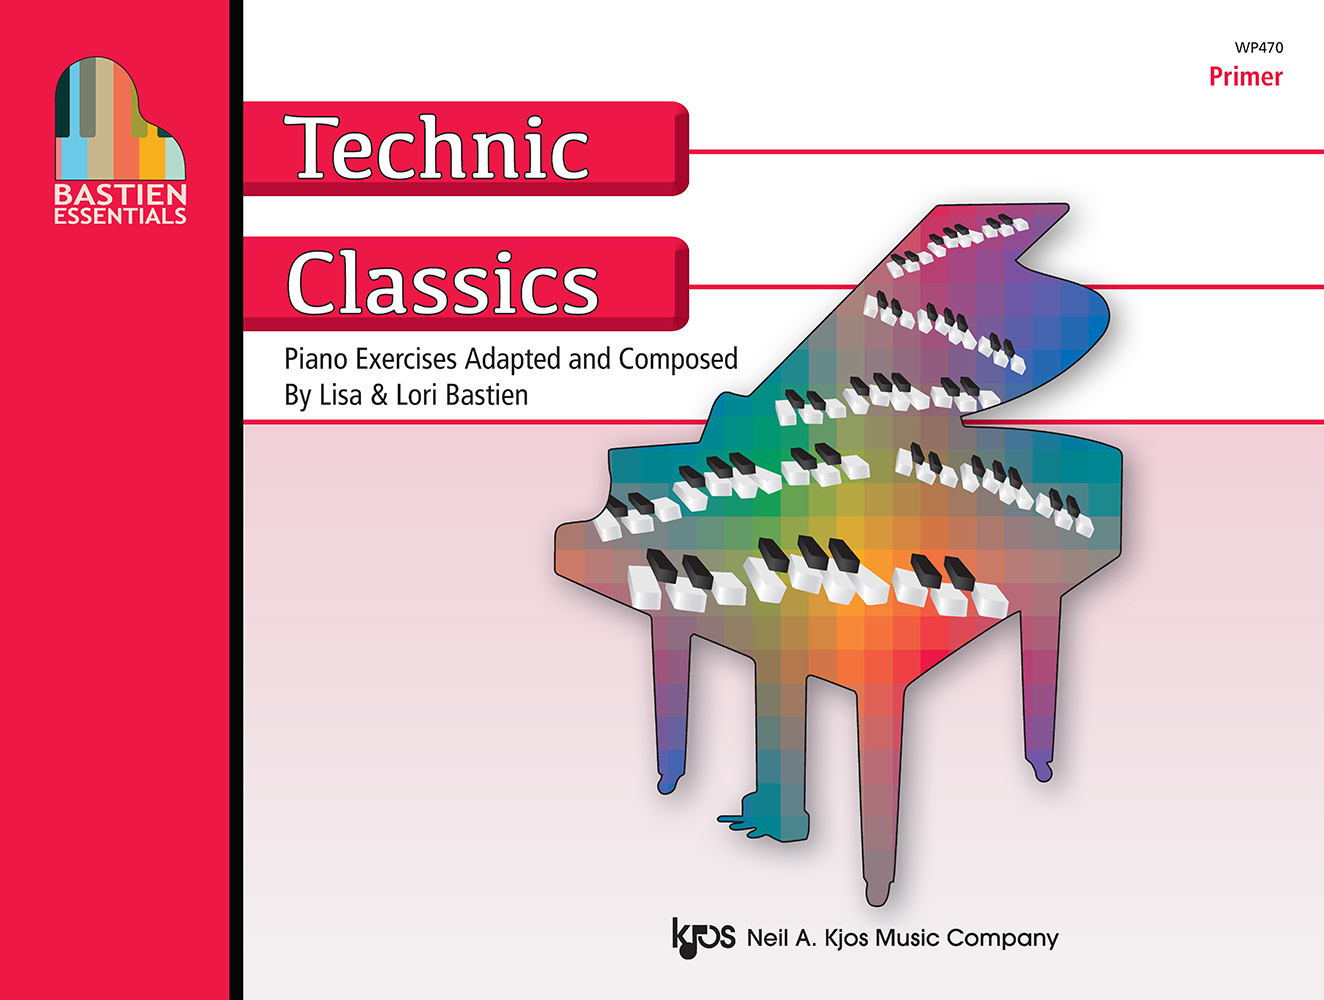 Bastien Essentials Technic Classics Primer Piano Sheet Music Songbook